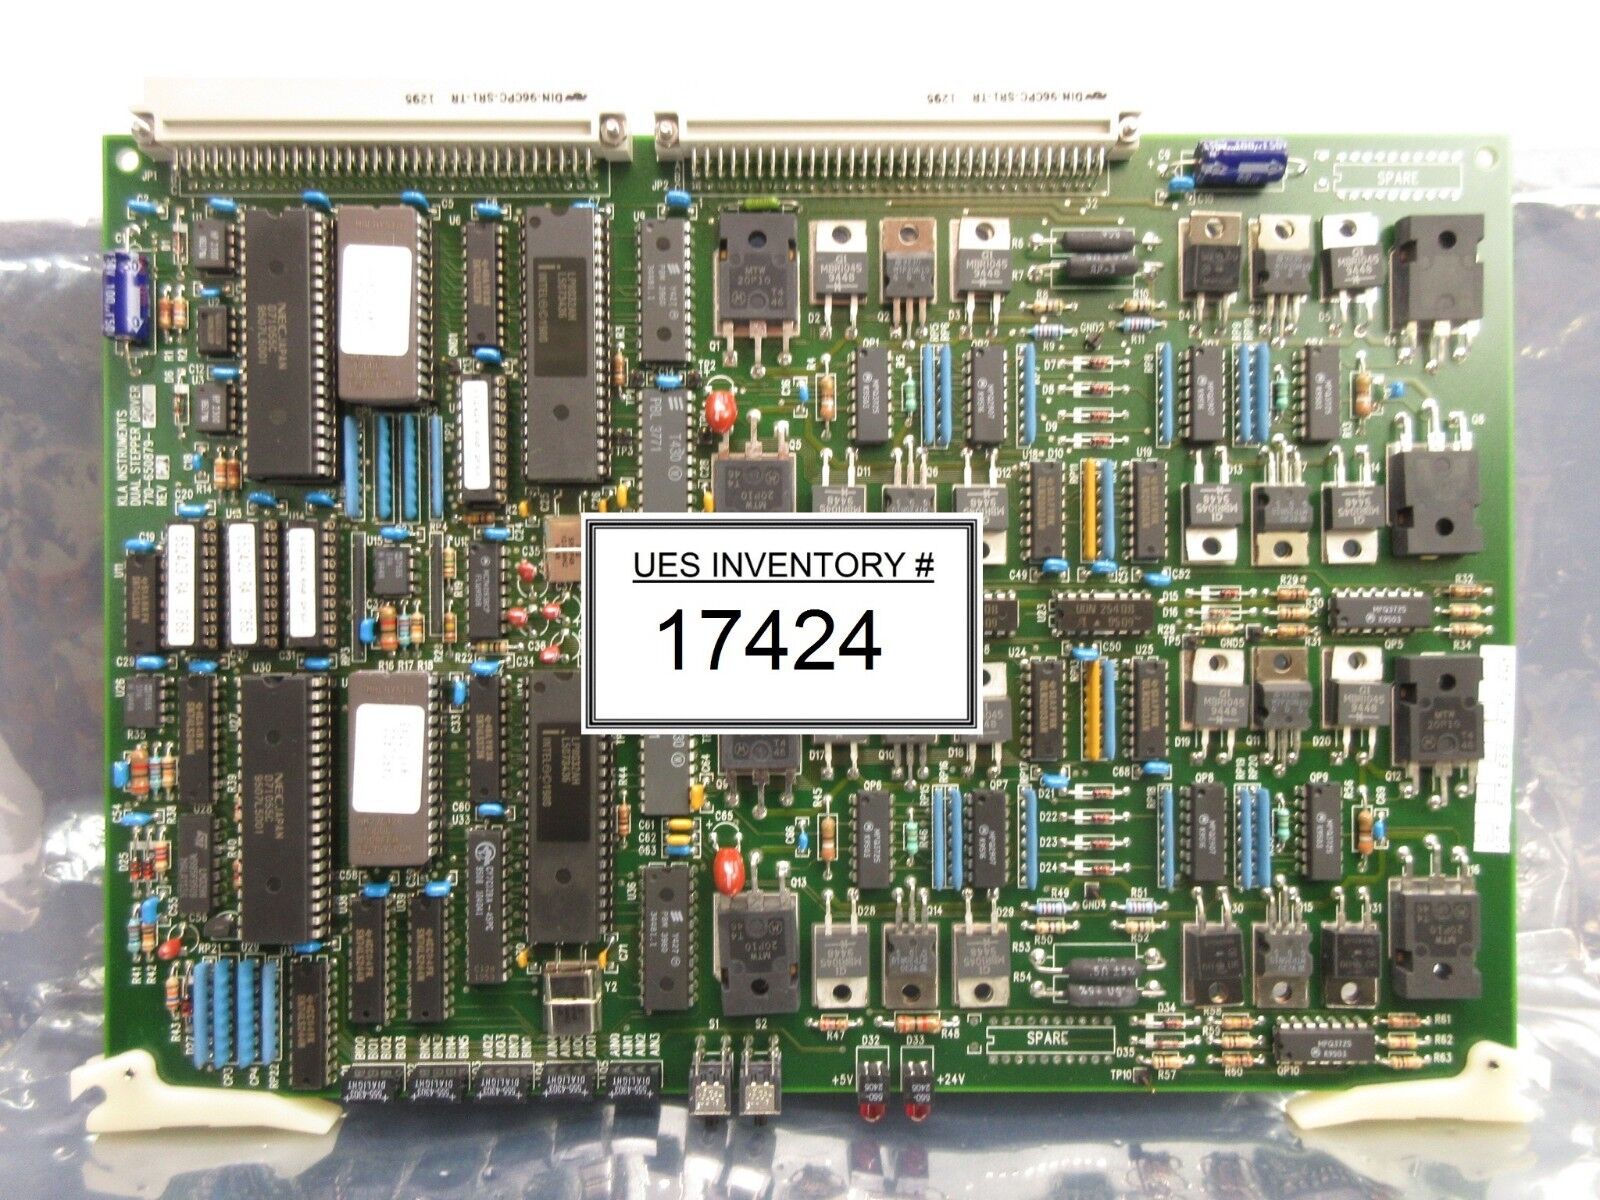 KLA Instruments 710-650879-20 Dual Stepper Driver PCB Card 2132 Rev. E1 Used